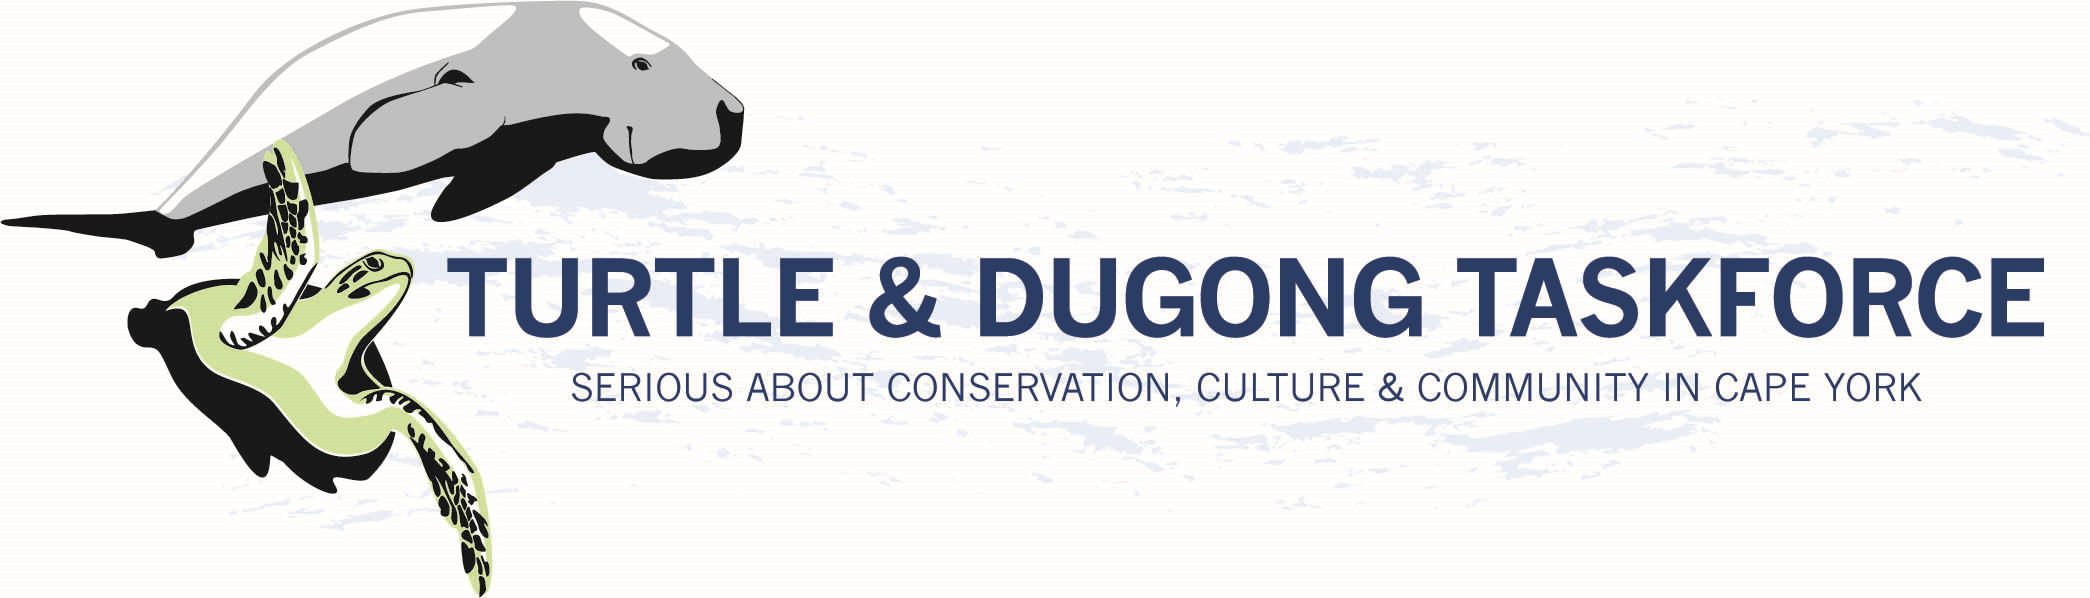 Dugong Logo - Turtle & Dugong Taskforce